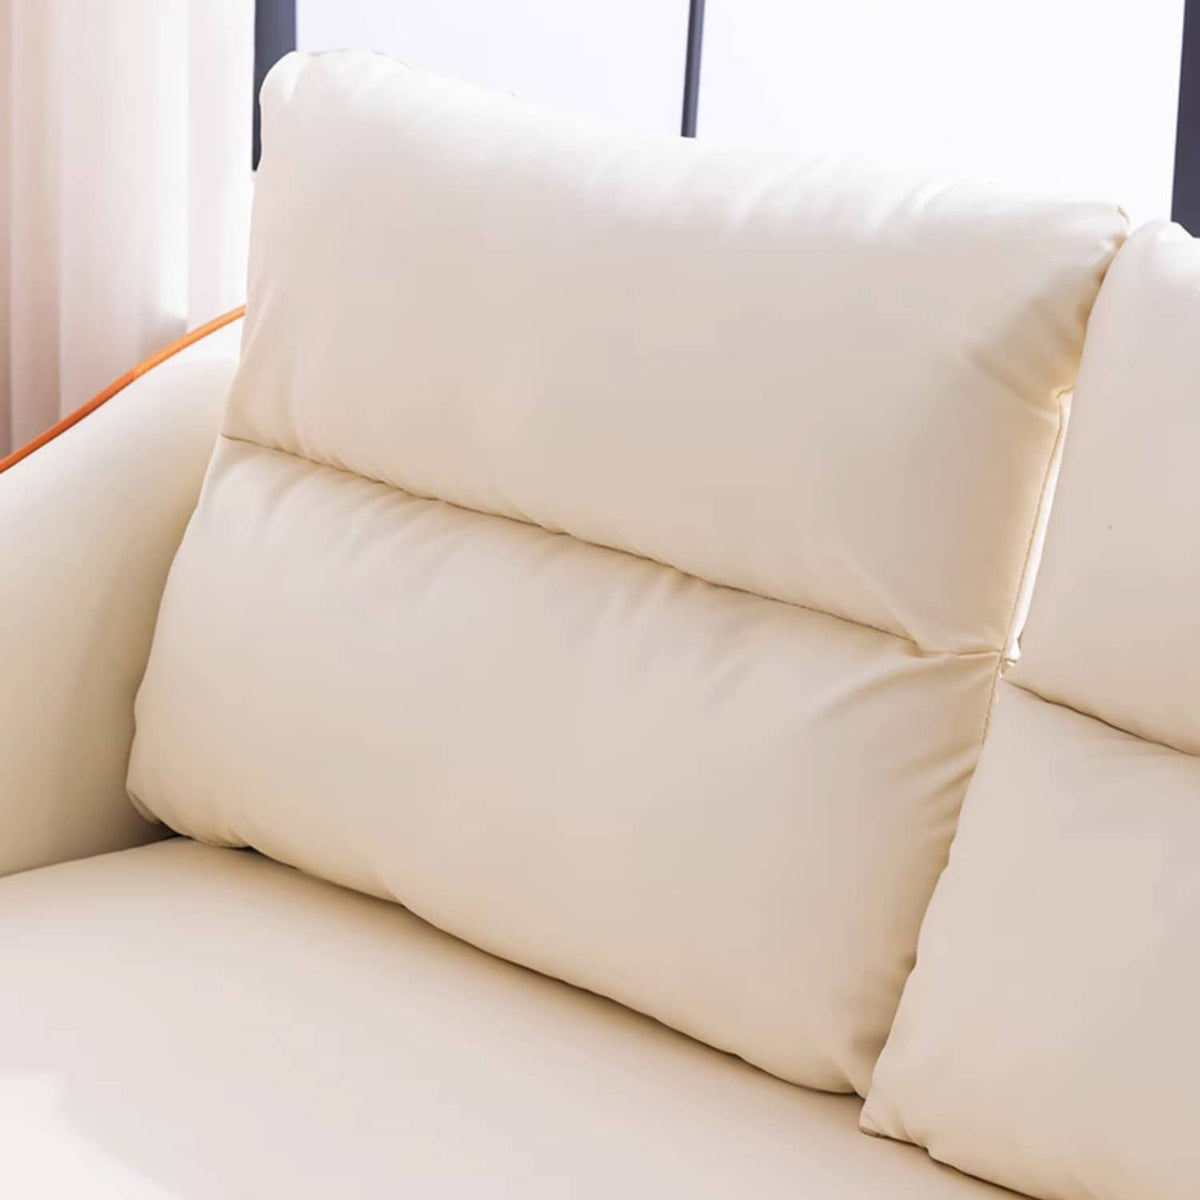 Modern Techno Fabric Sofa Set in Orange, Off-White, Dark Blue, and Green with Elegant Wood Accents qm-1